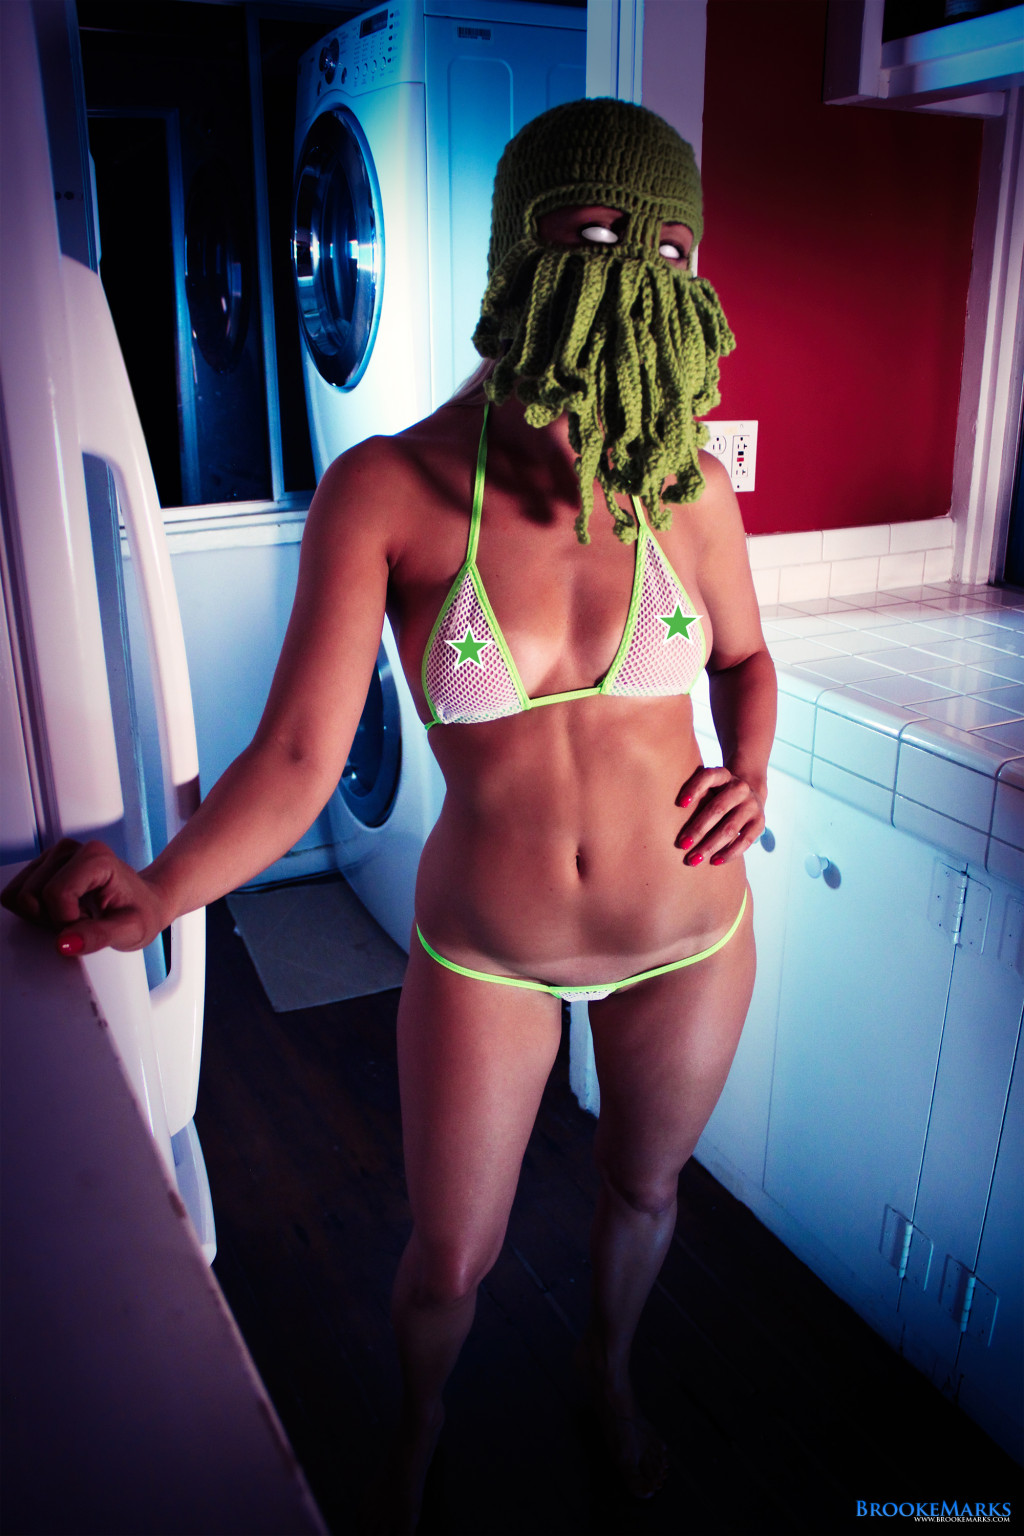 Brooke bionda calda nel suo bikini e maschera di cthulhus
 #70727220